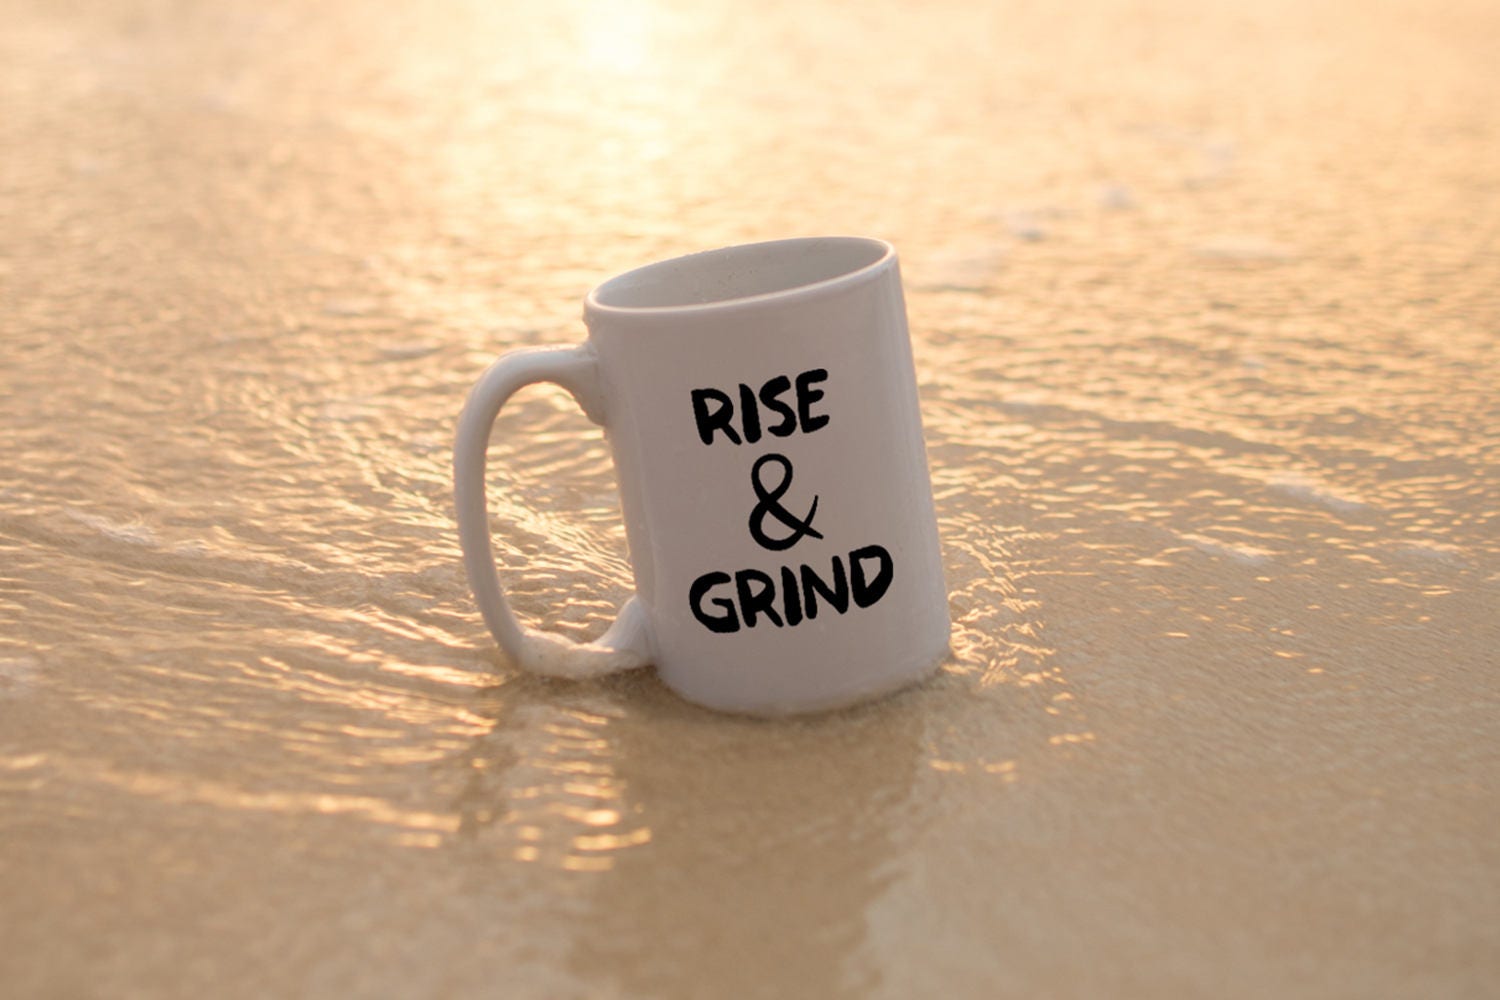 Rise and Grind, Motivational Coffee Mug, Dishwasher Safe, Microwave Sa –  The Dally Grind